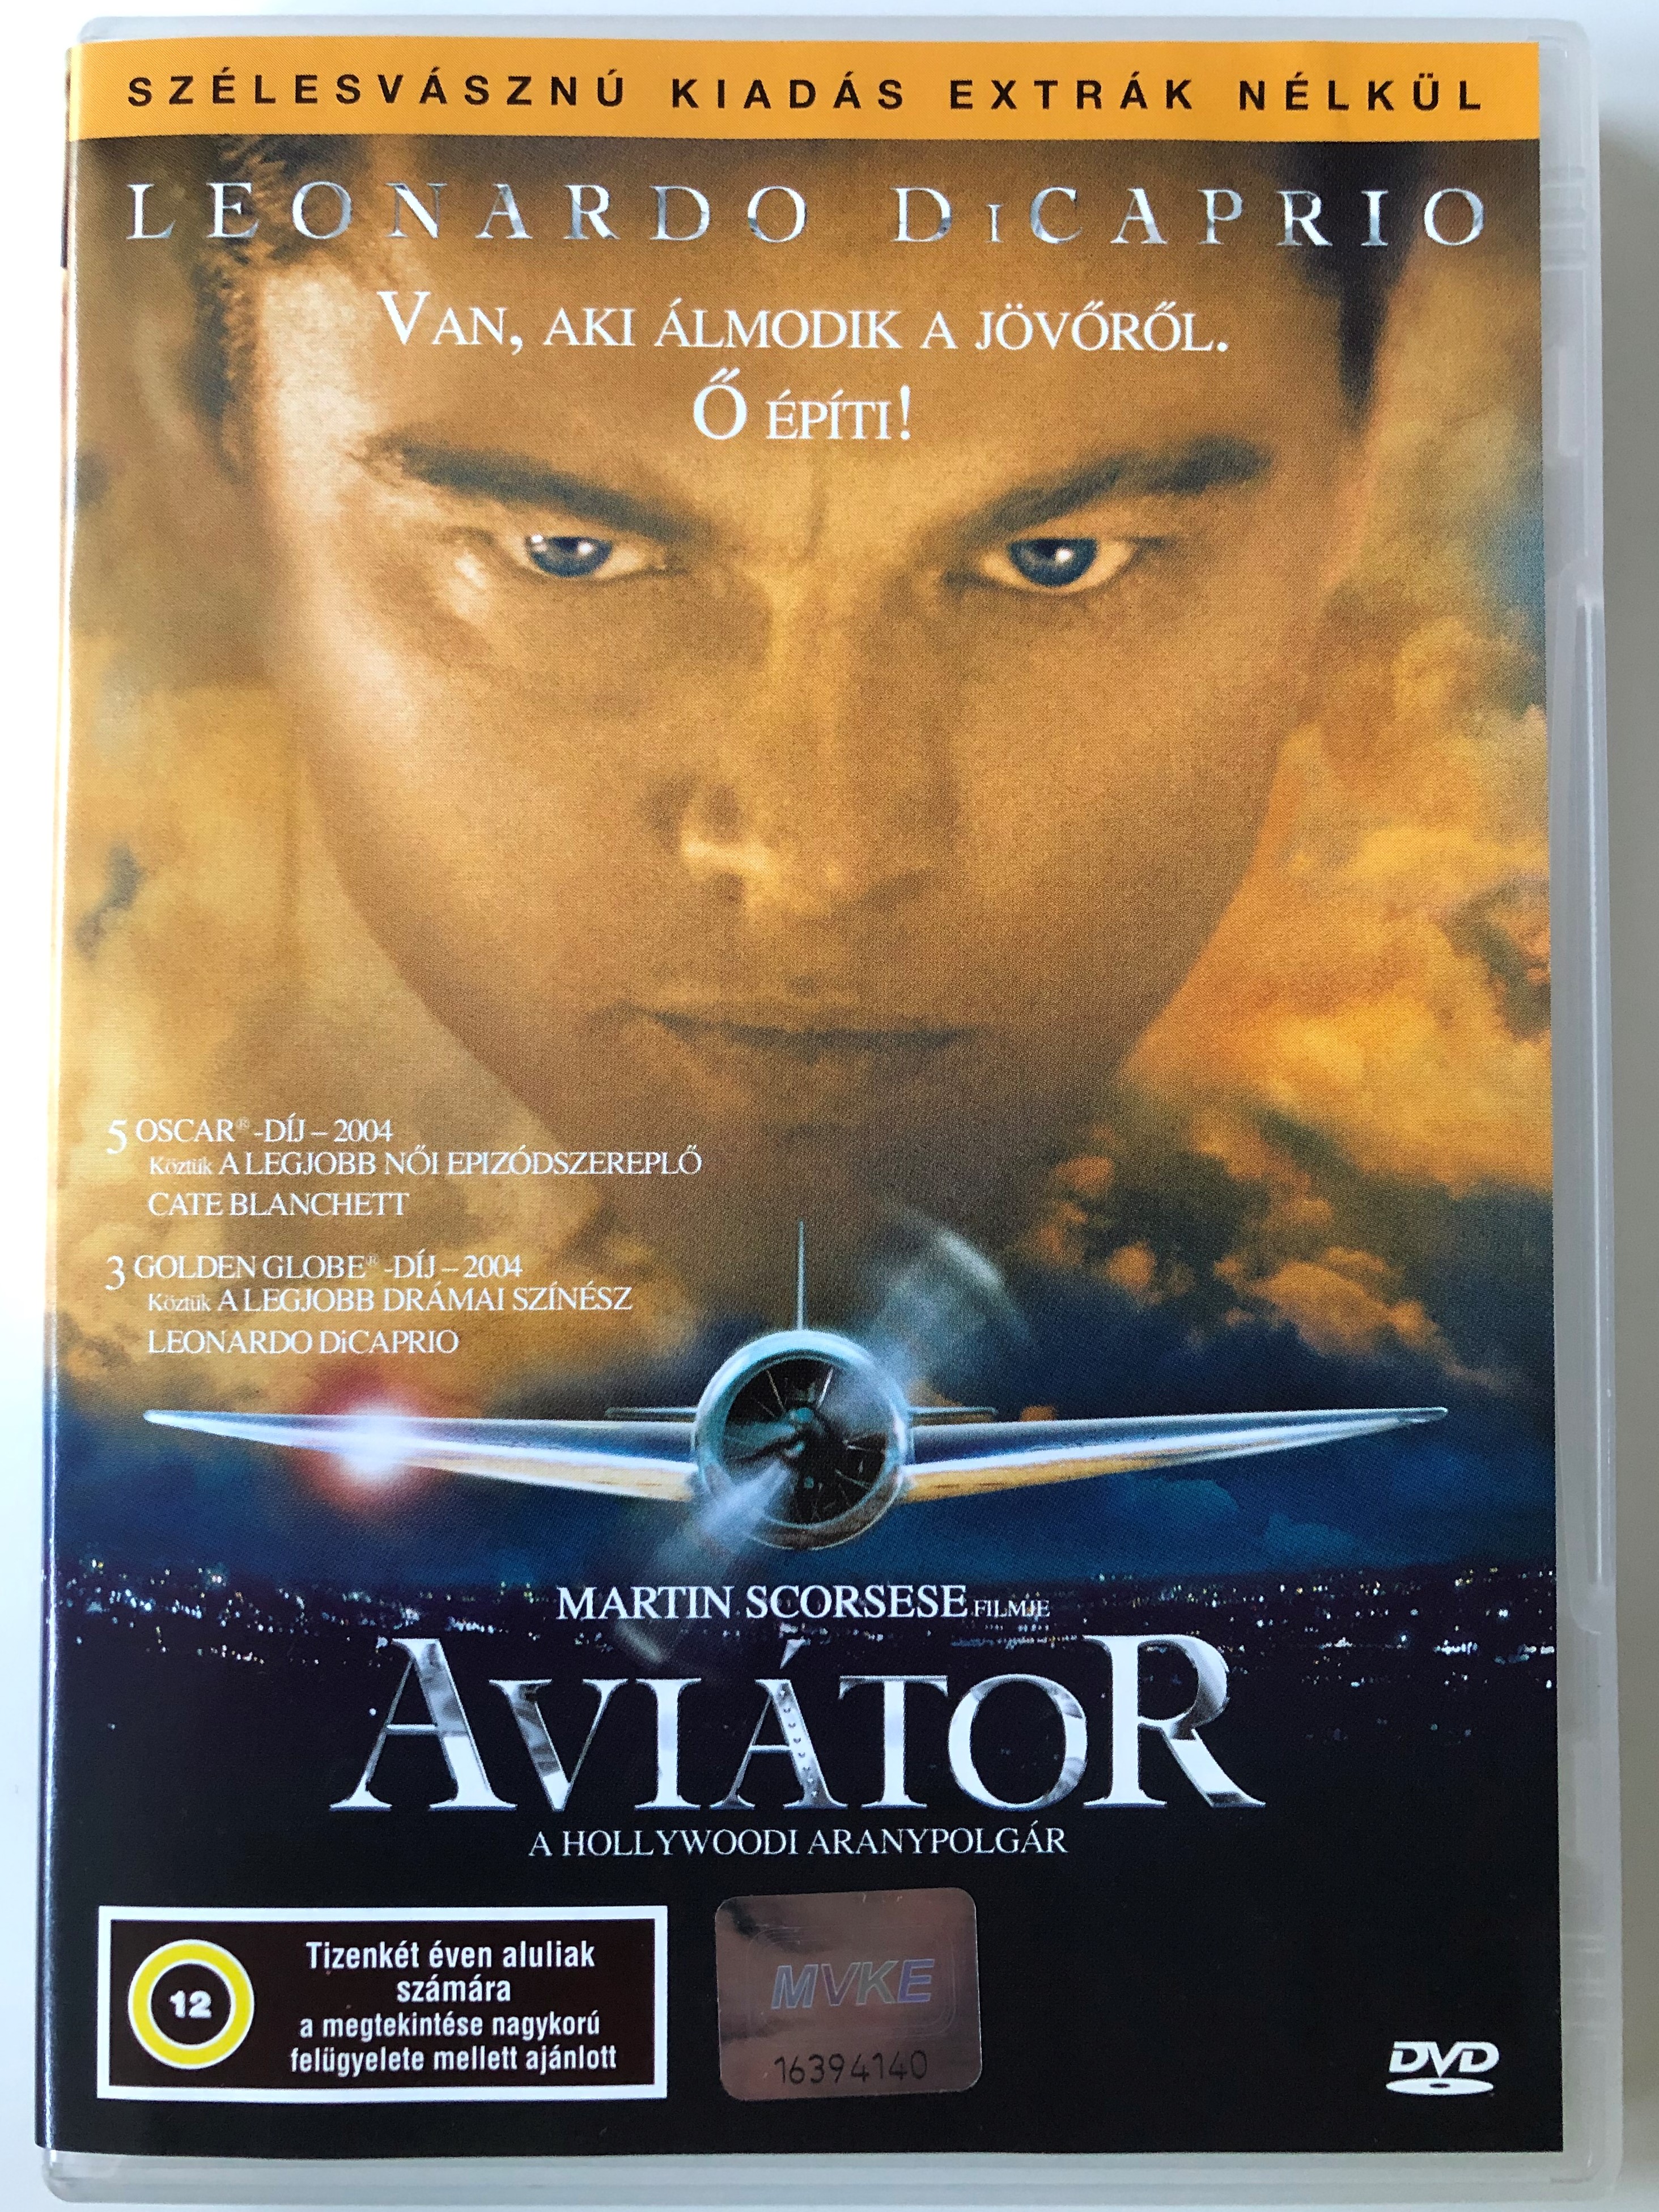 The Aviator DVD 2004 Aviátor / Directed by Martin Scorsese / Starring:  Leonardo DiCaprio, Cate Blanchett, Kate Beckinsale, John C. Reilly -  bibleinmylanguage